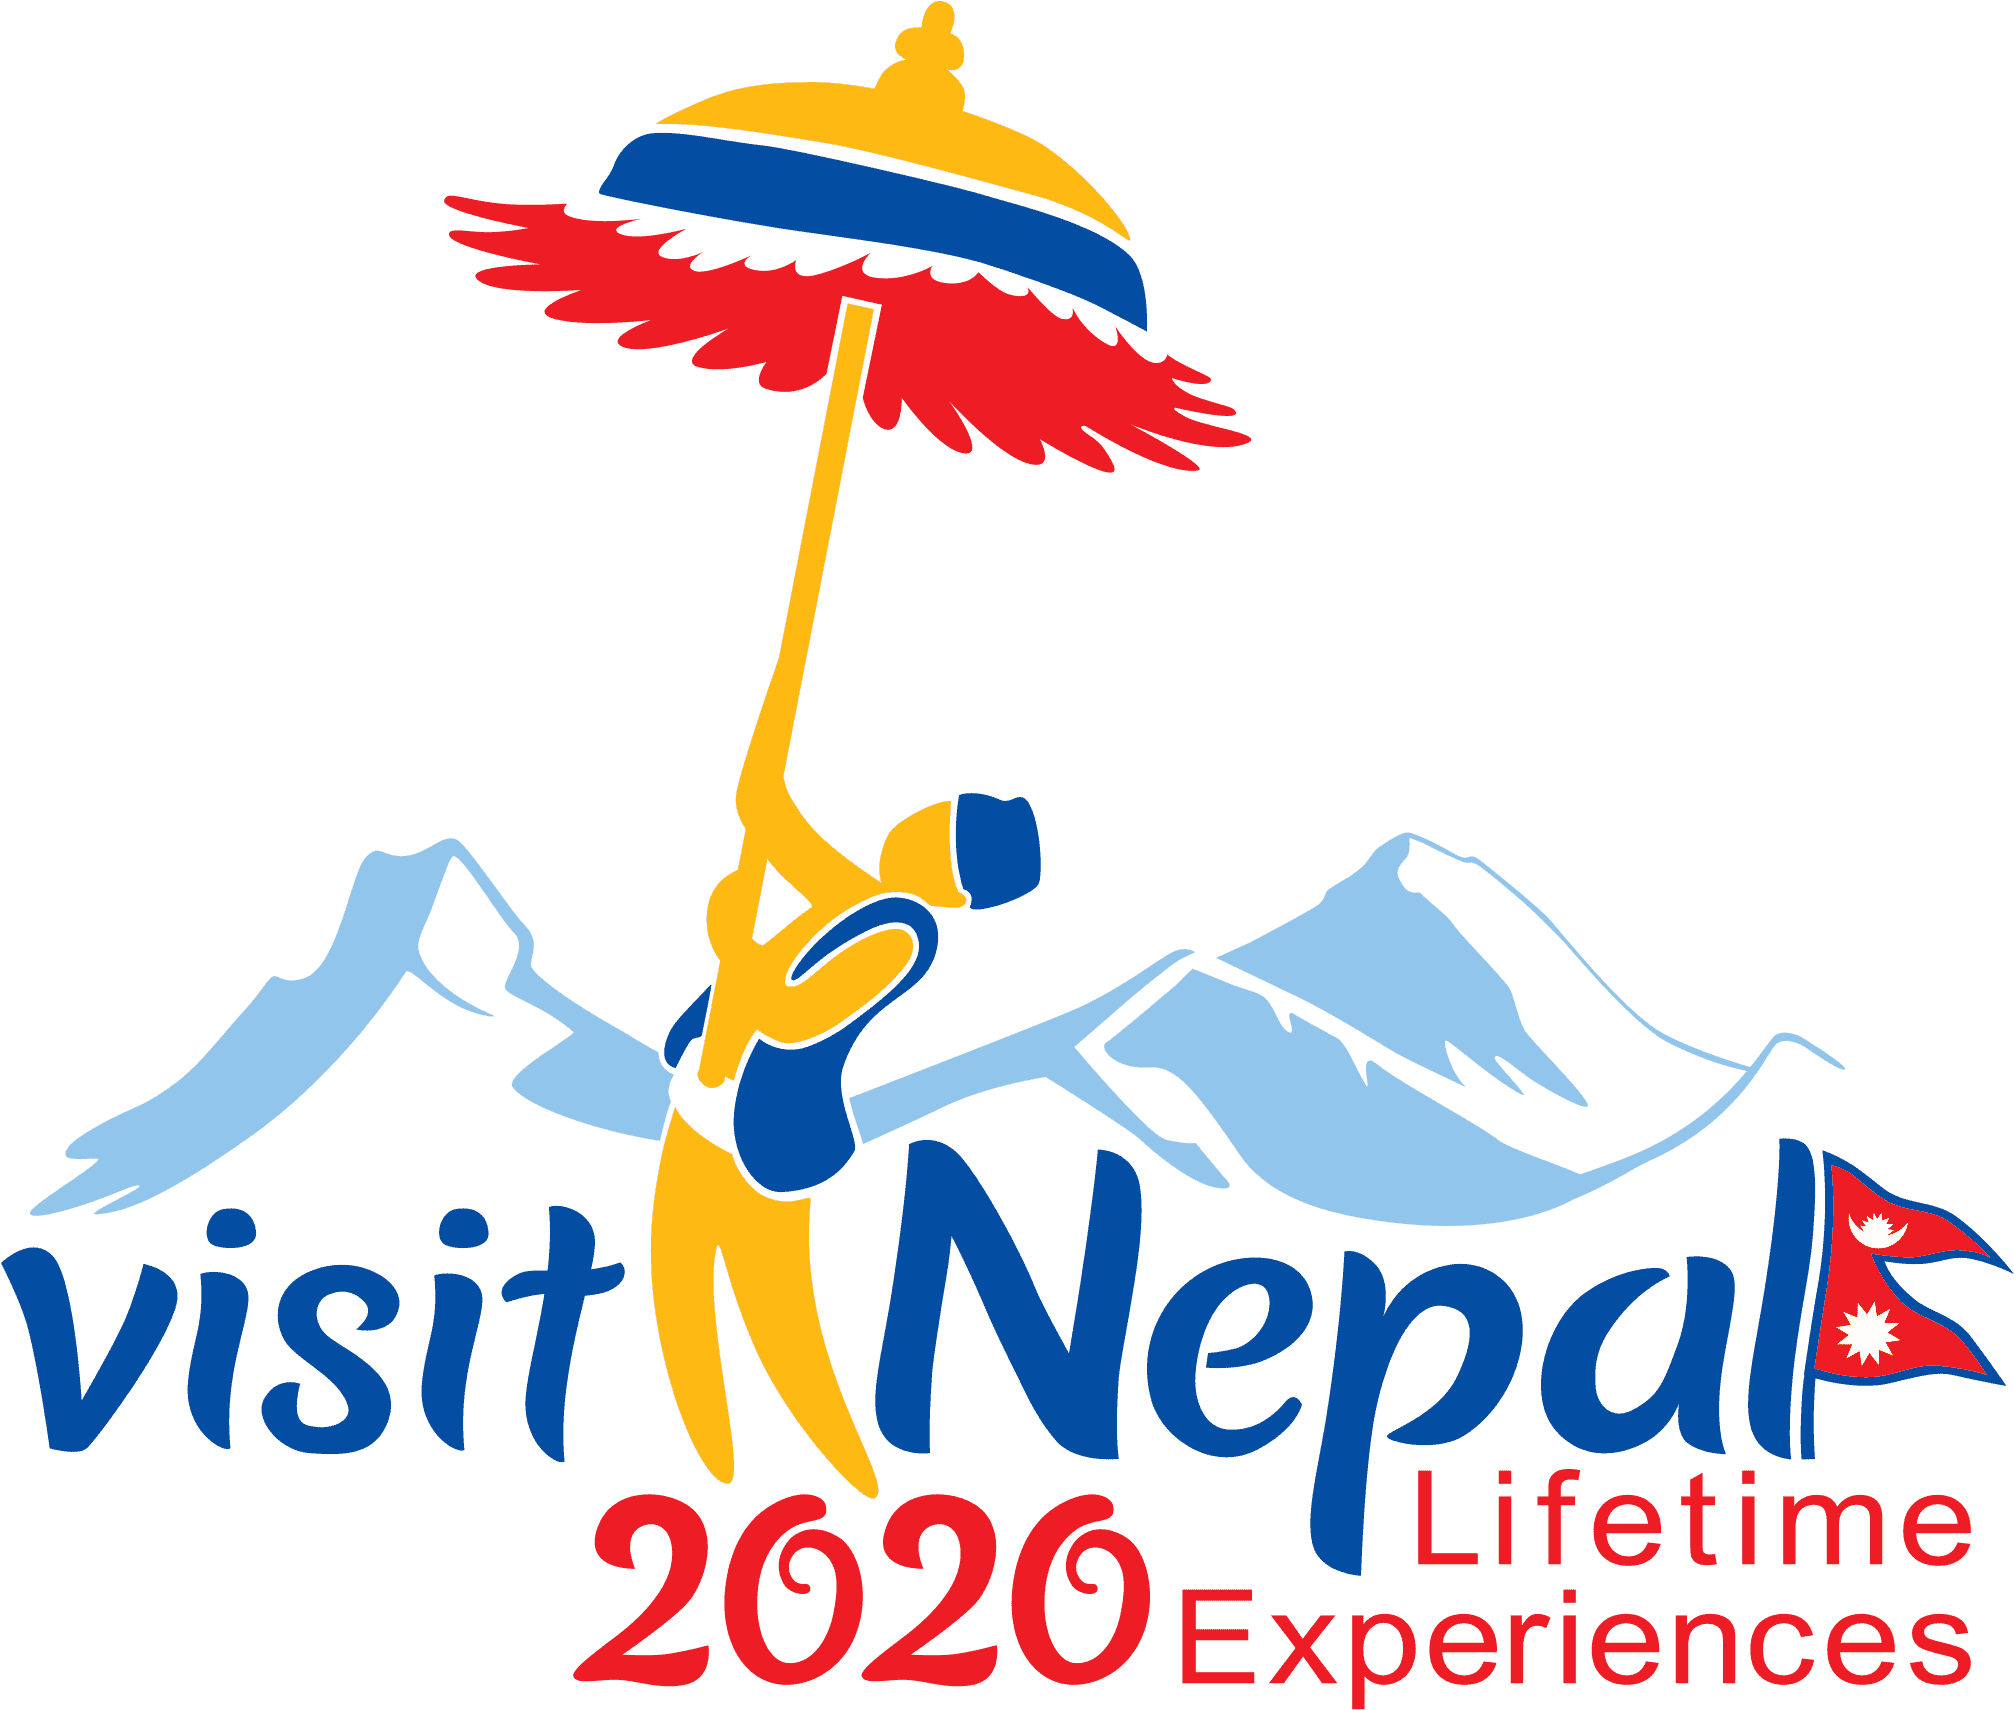 Nepal Visit Year 2020, Hd Png Download